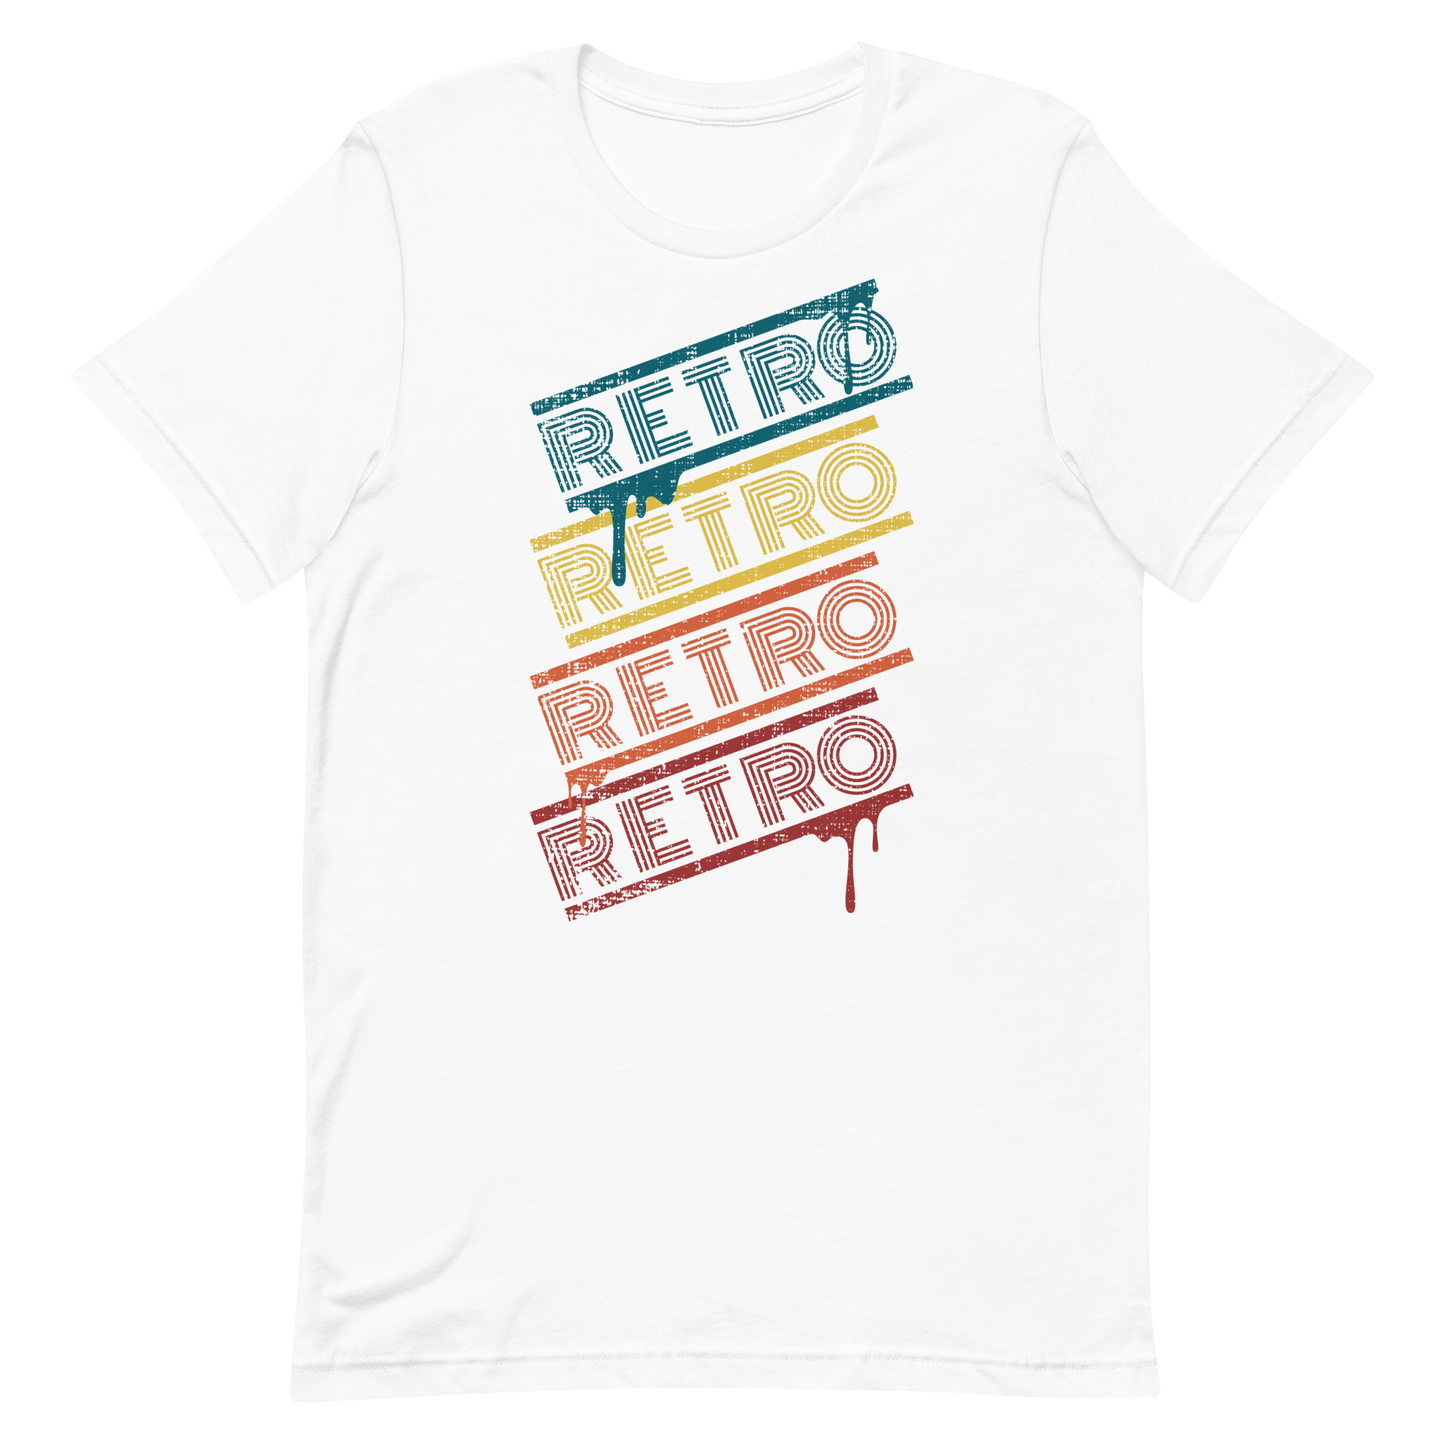 Retro Unisex T-Shirt - Colorful Retro Typography Design White